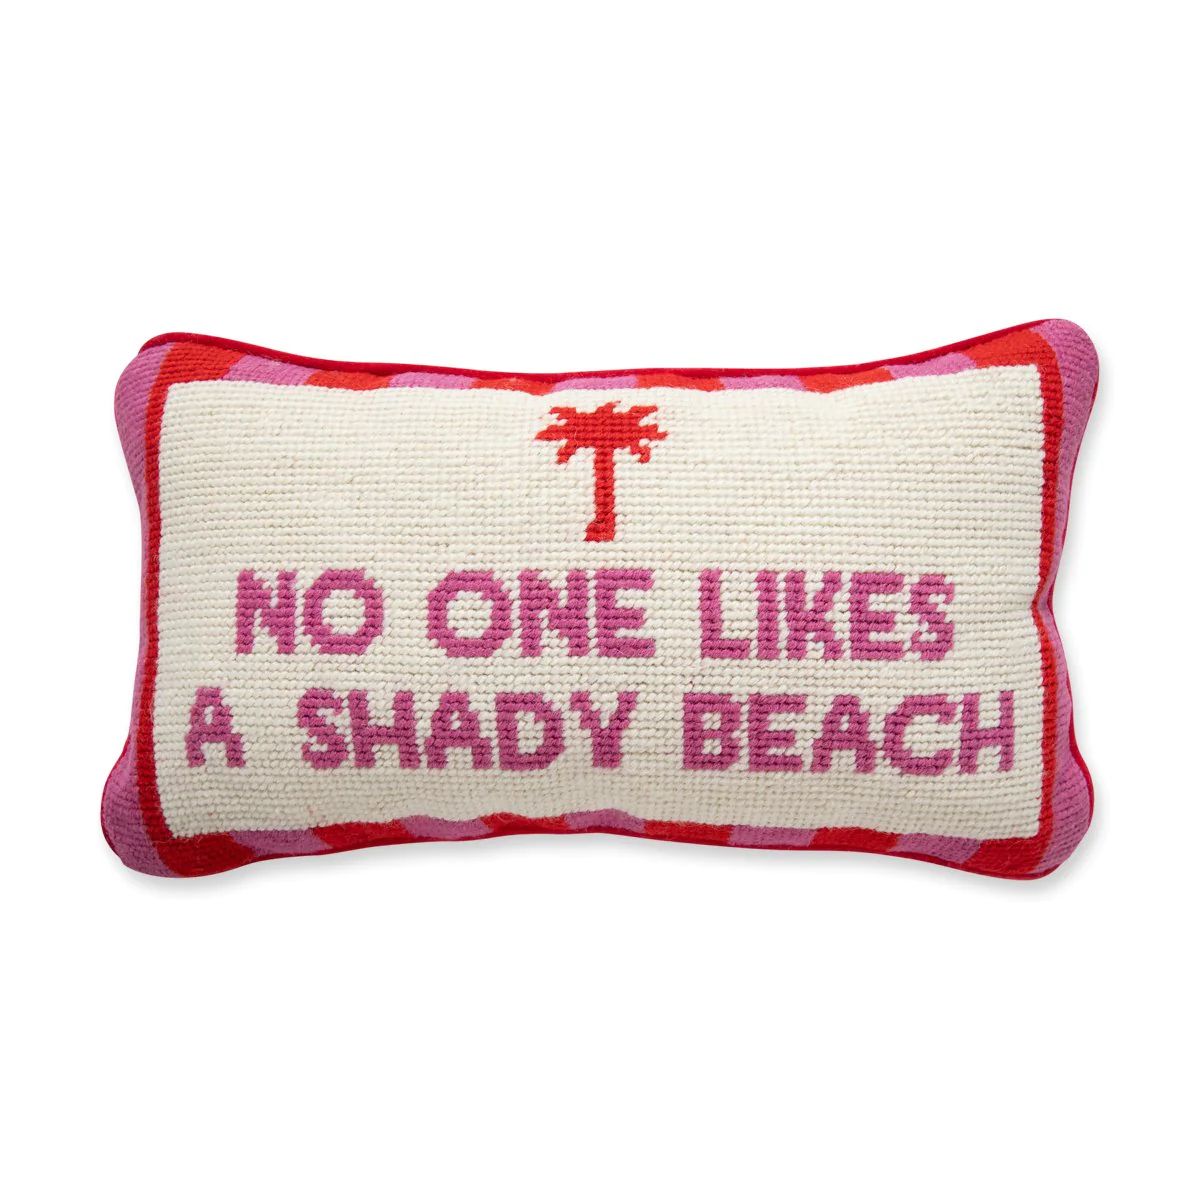 Furbish Studio - Shady Beach Needlepoint Pillow | Furbish Studio